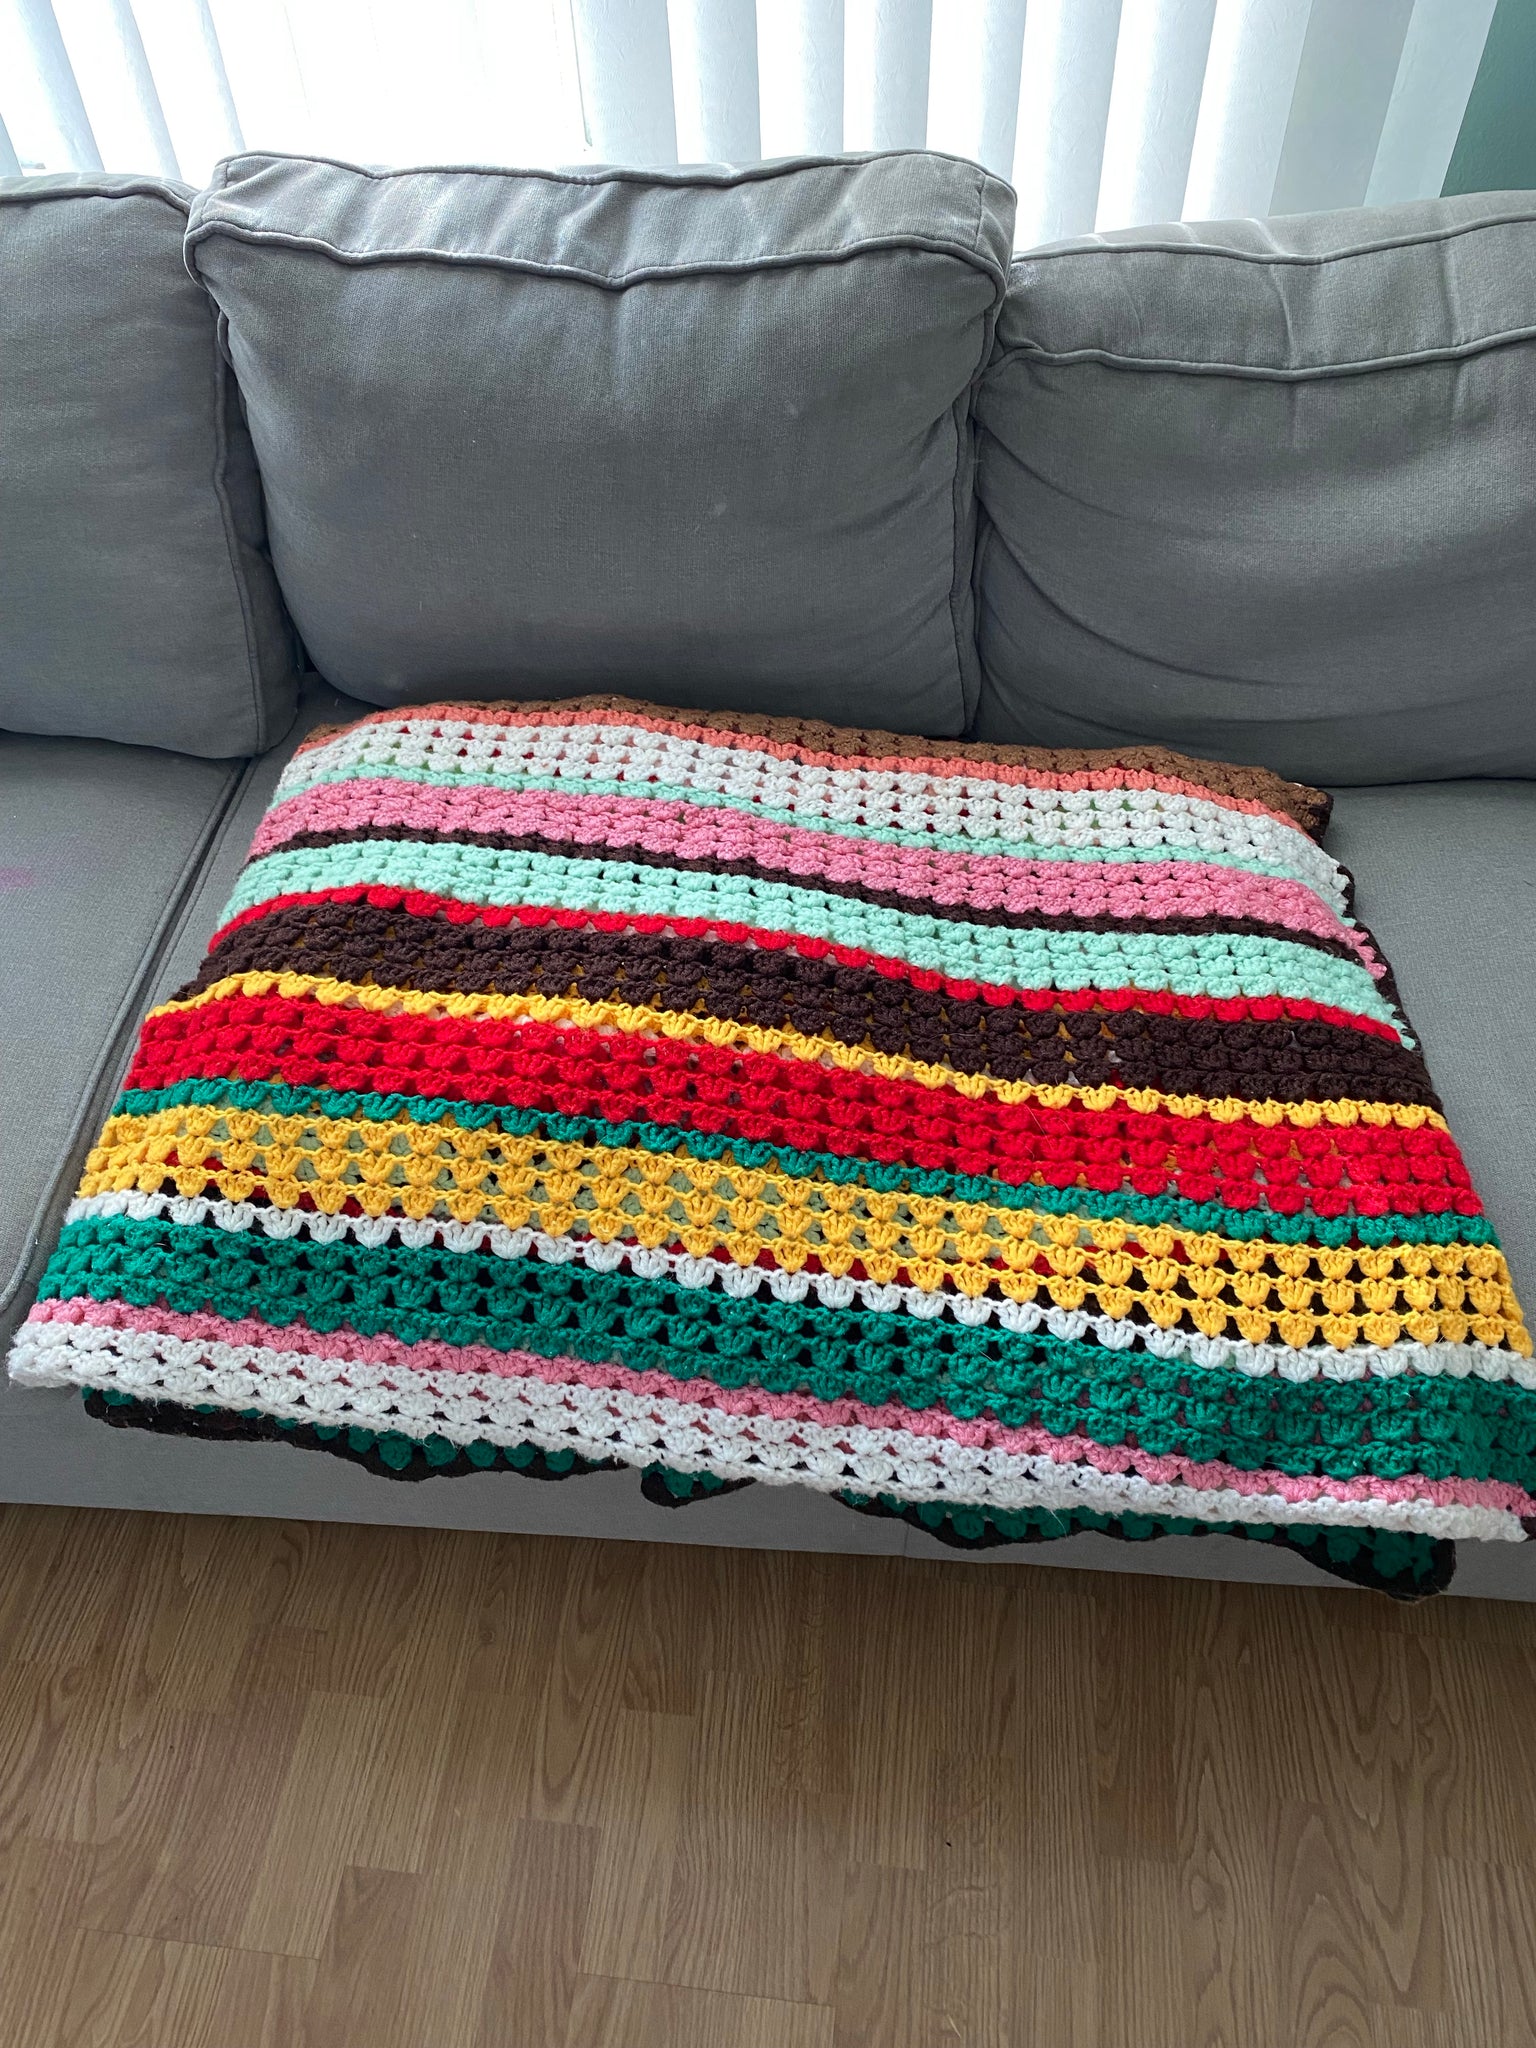 Crochet striped blanket